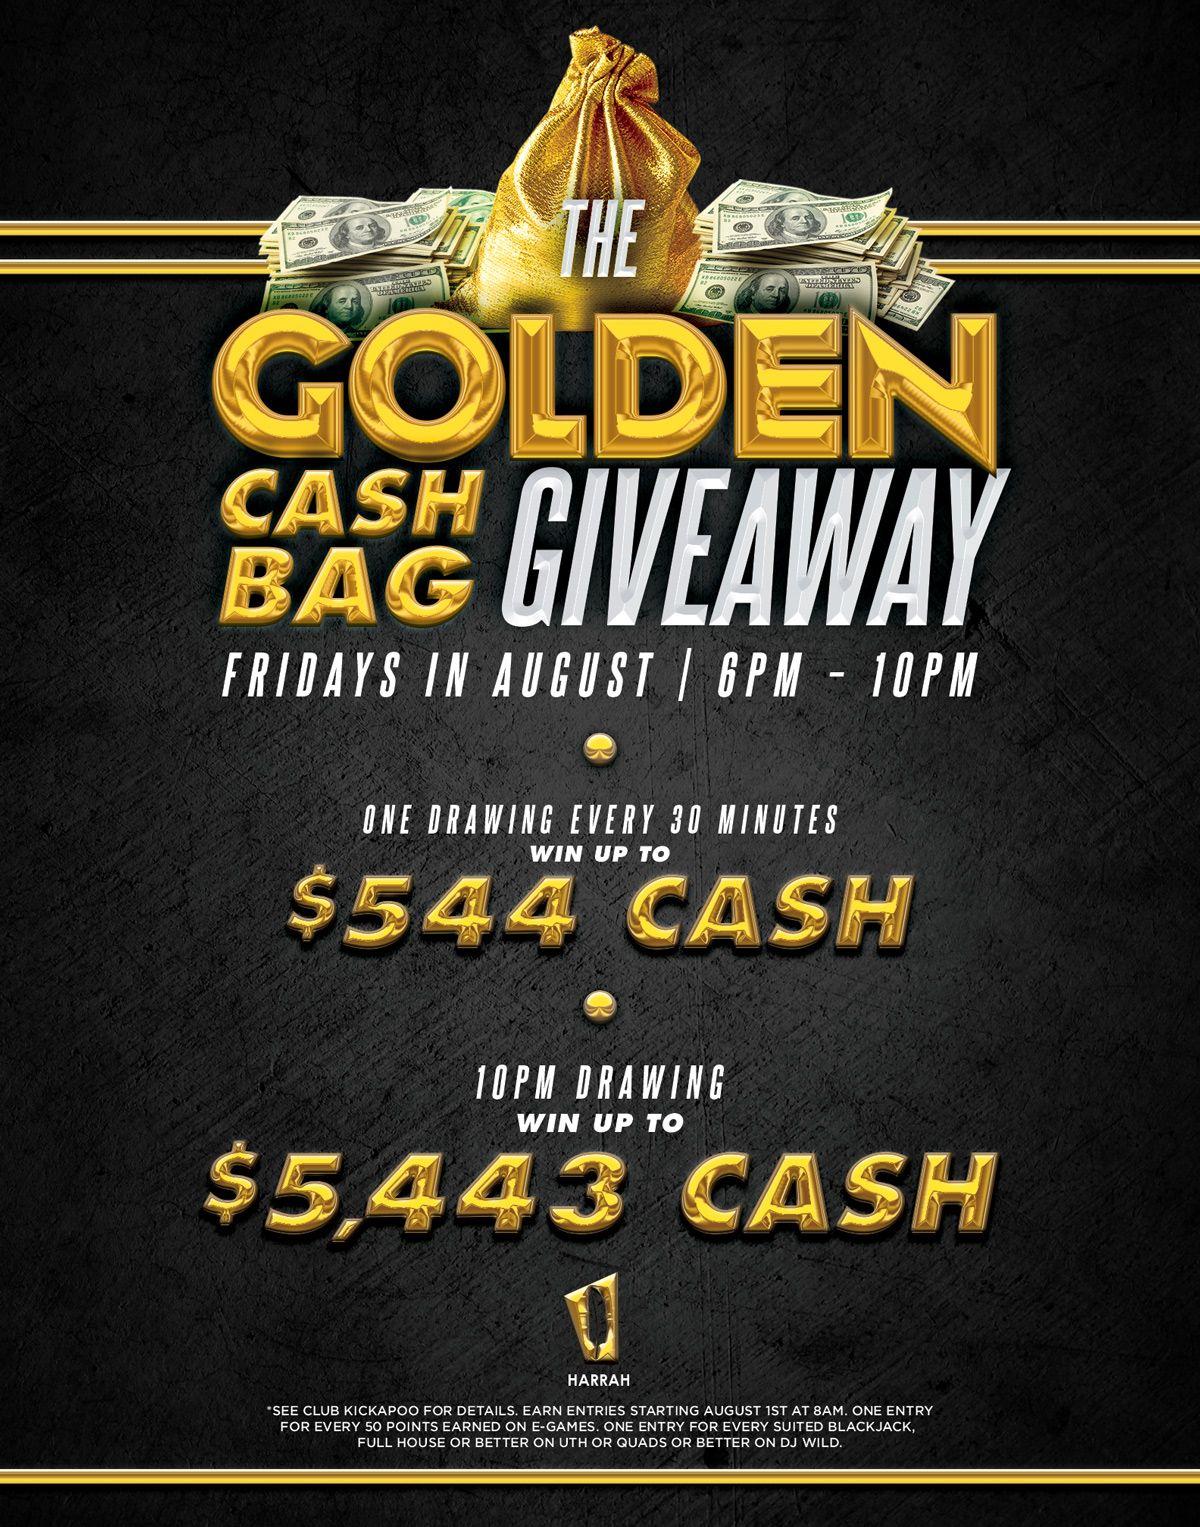 Golden Cash Logo - Kickapoo Casino. The Golden Cash Bag Giveaway